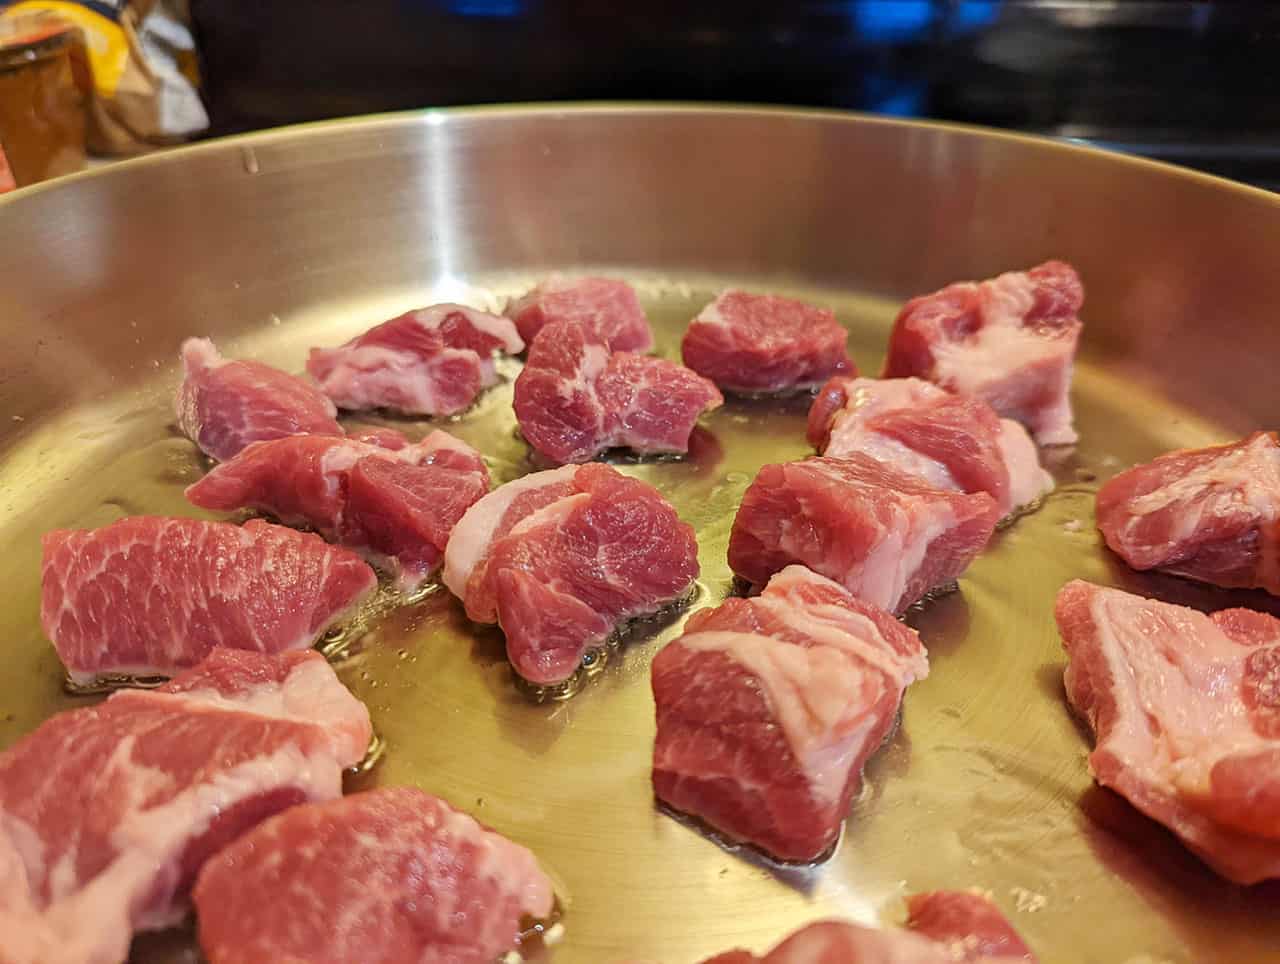 arberware Frying Pan searing beef chunks